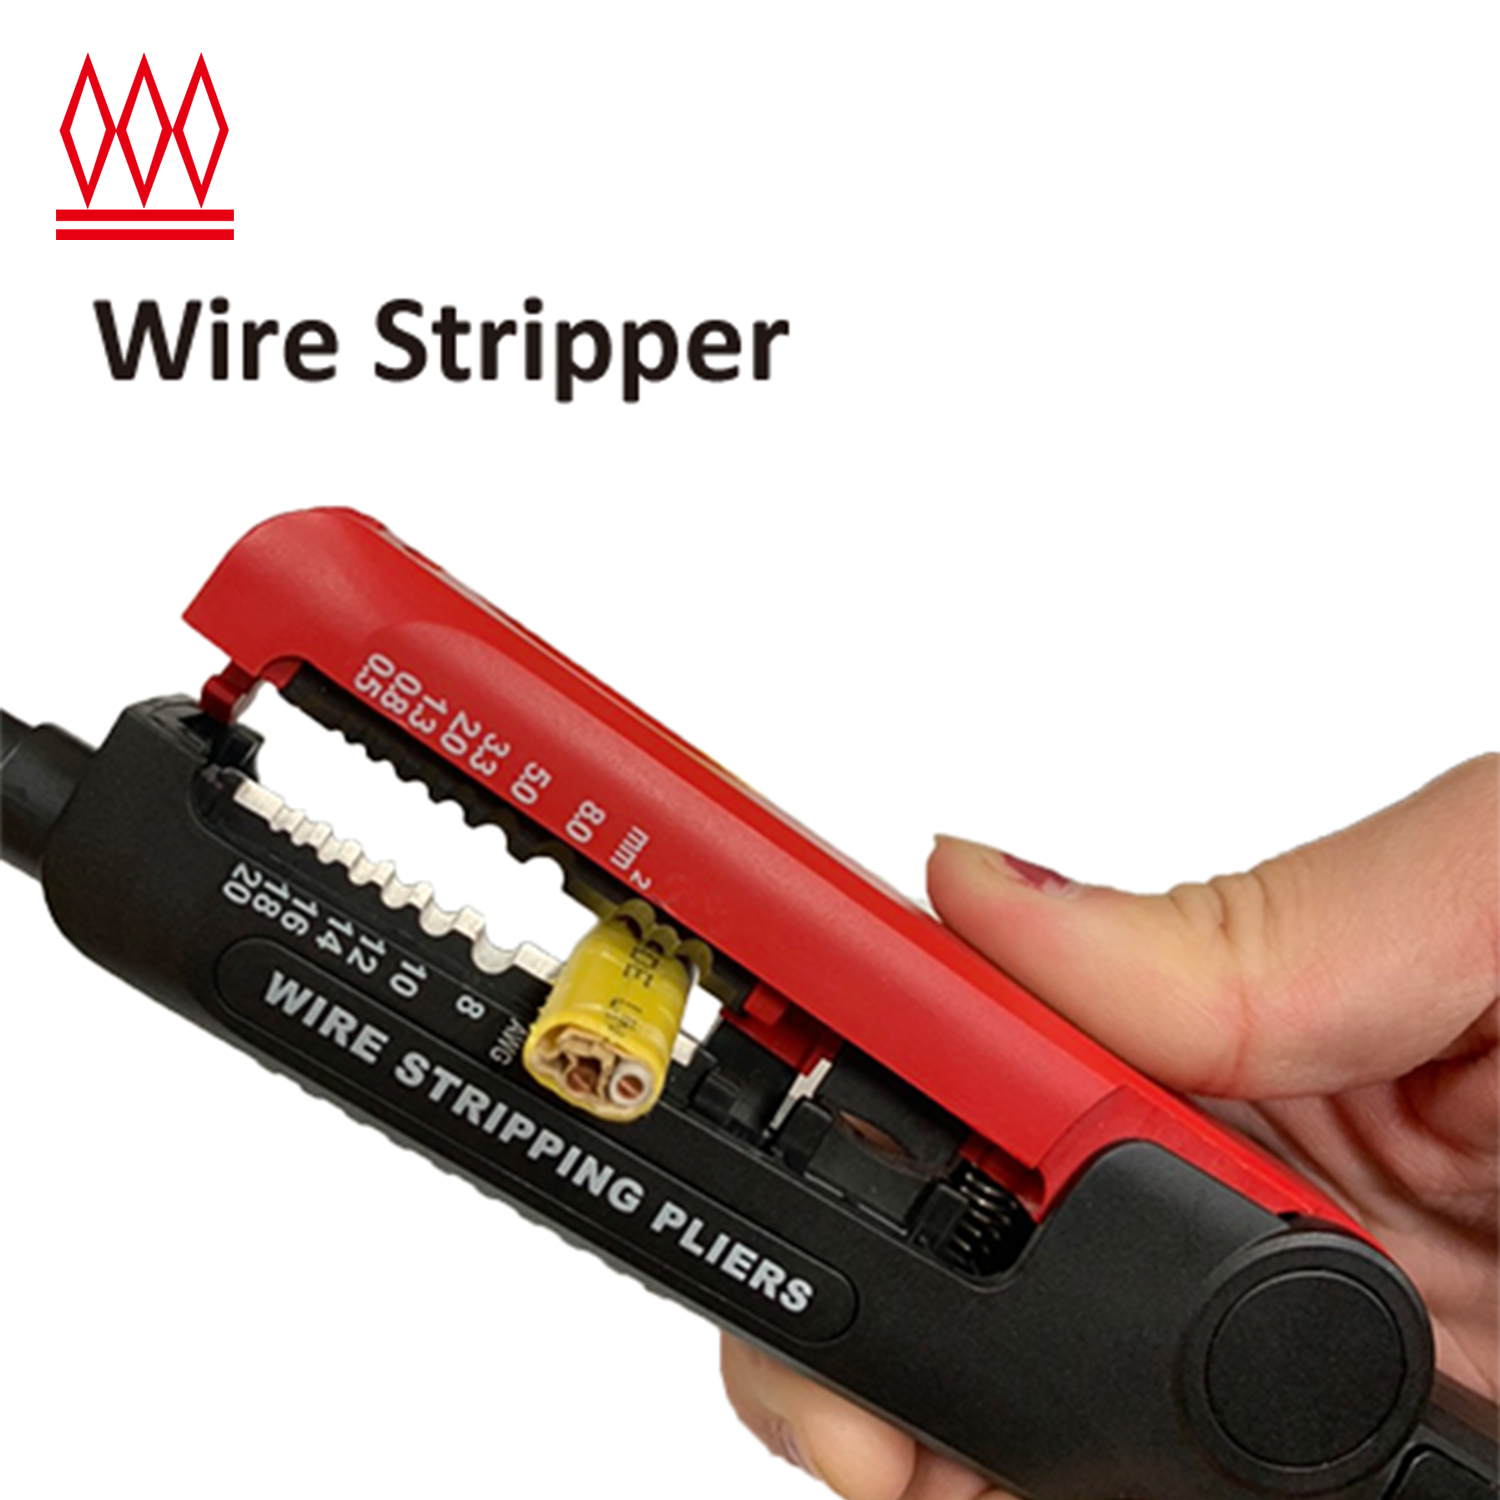 Voltage Tester with Wire Stripper